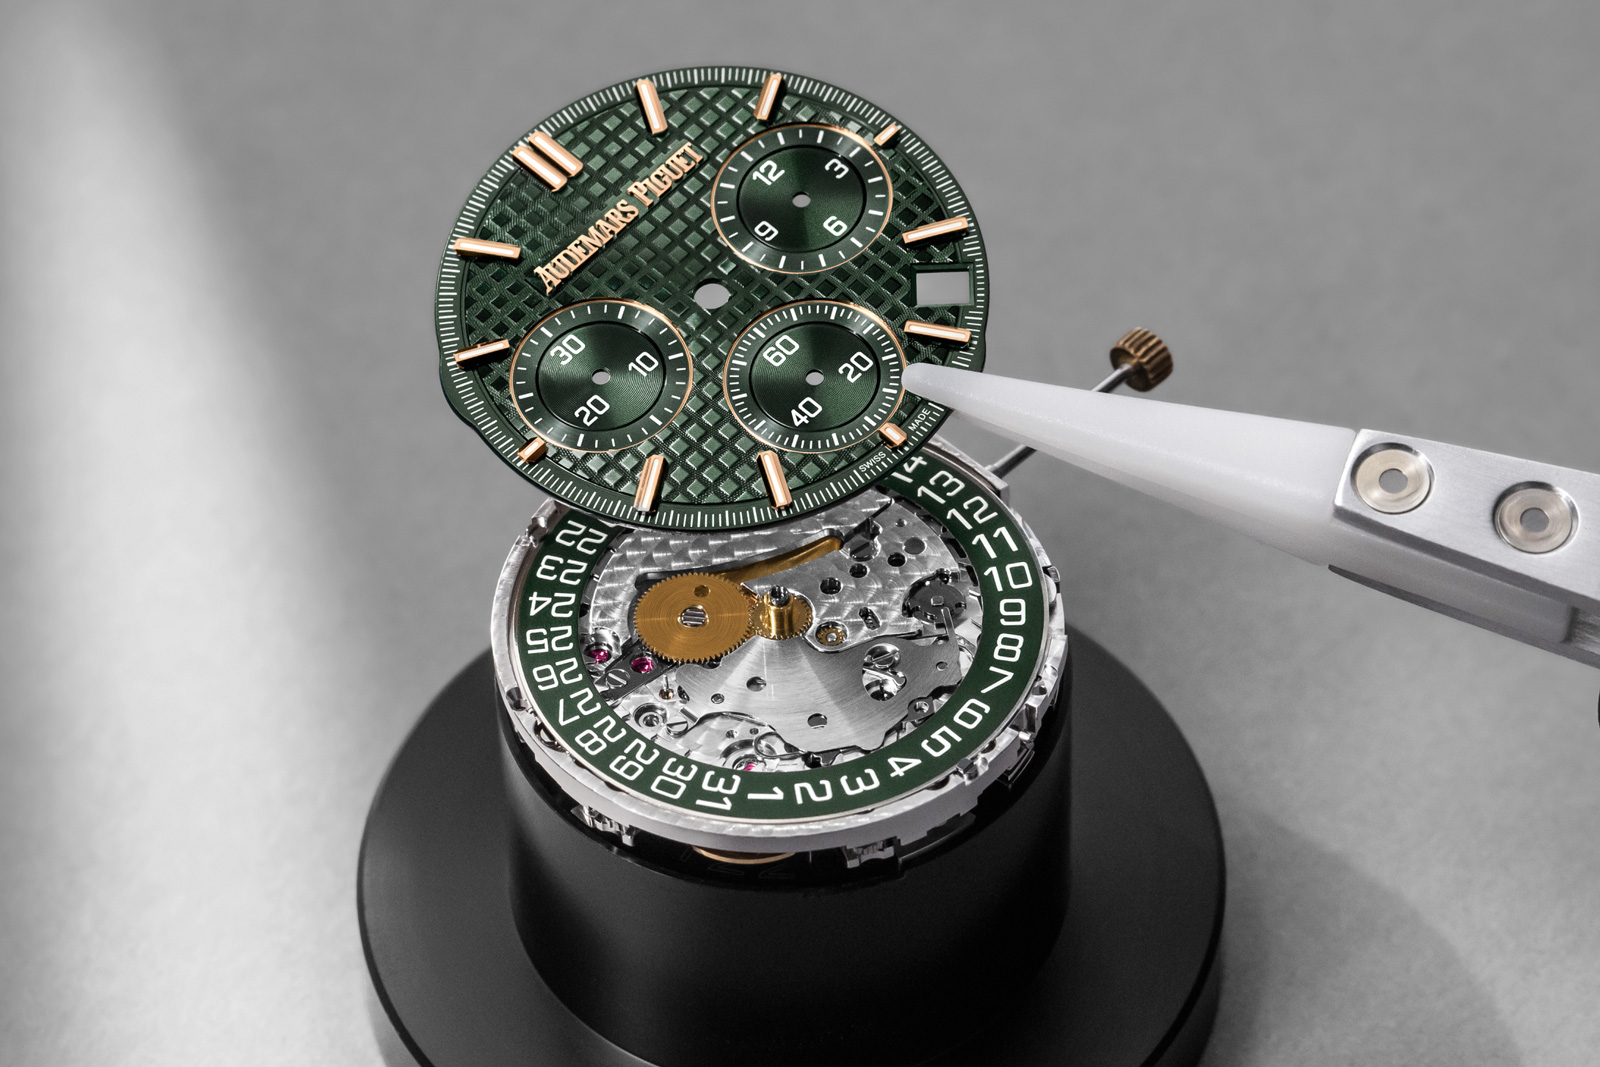 Audemars Piguet Royal Oak Selfwinding Chronograph “50th Anniversary” Steel Bracelet Green Dial (Ref #26240ST.OO.1320ST.04)